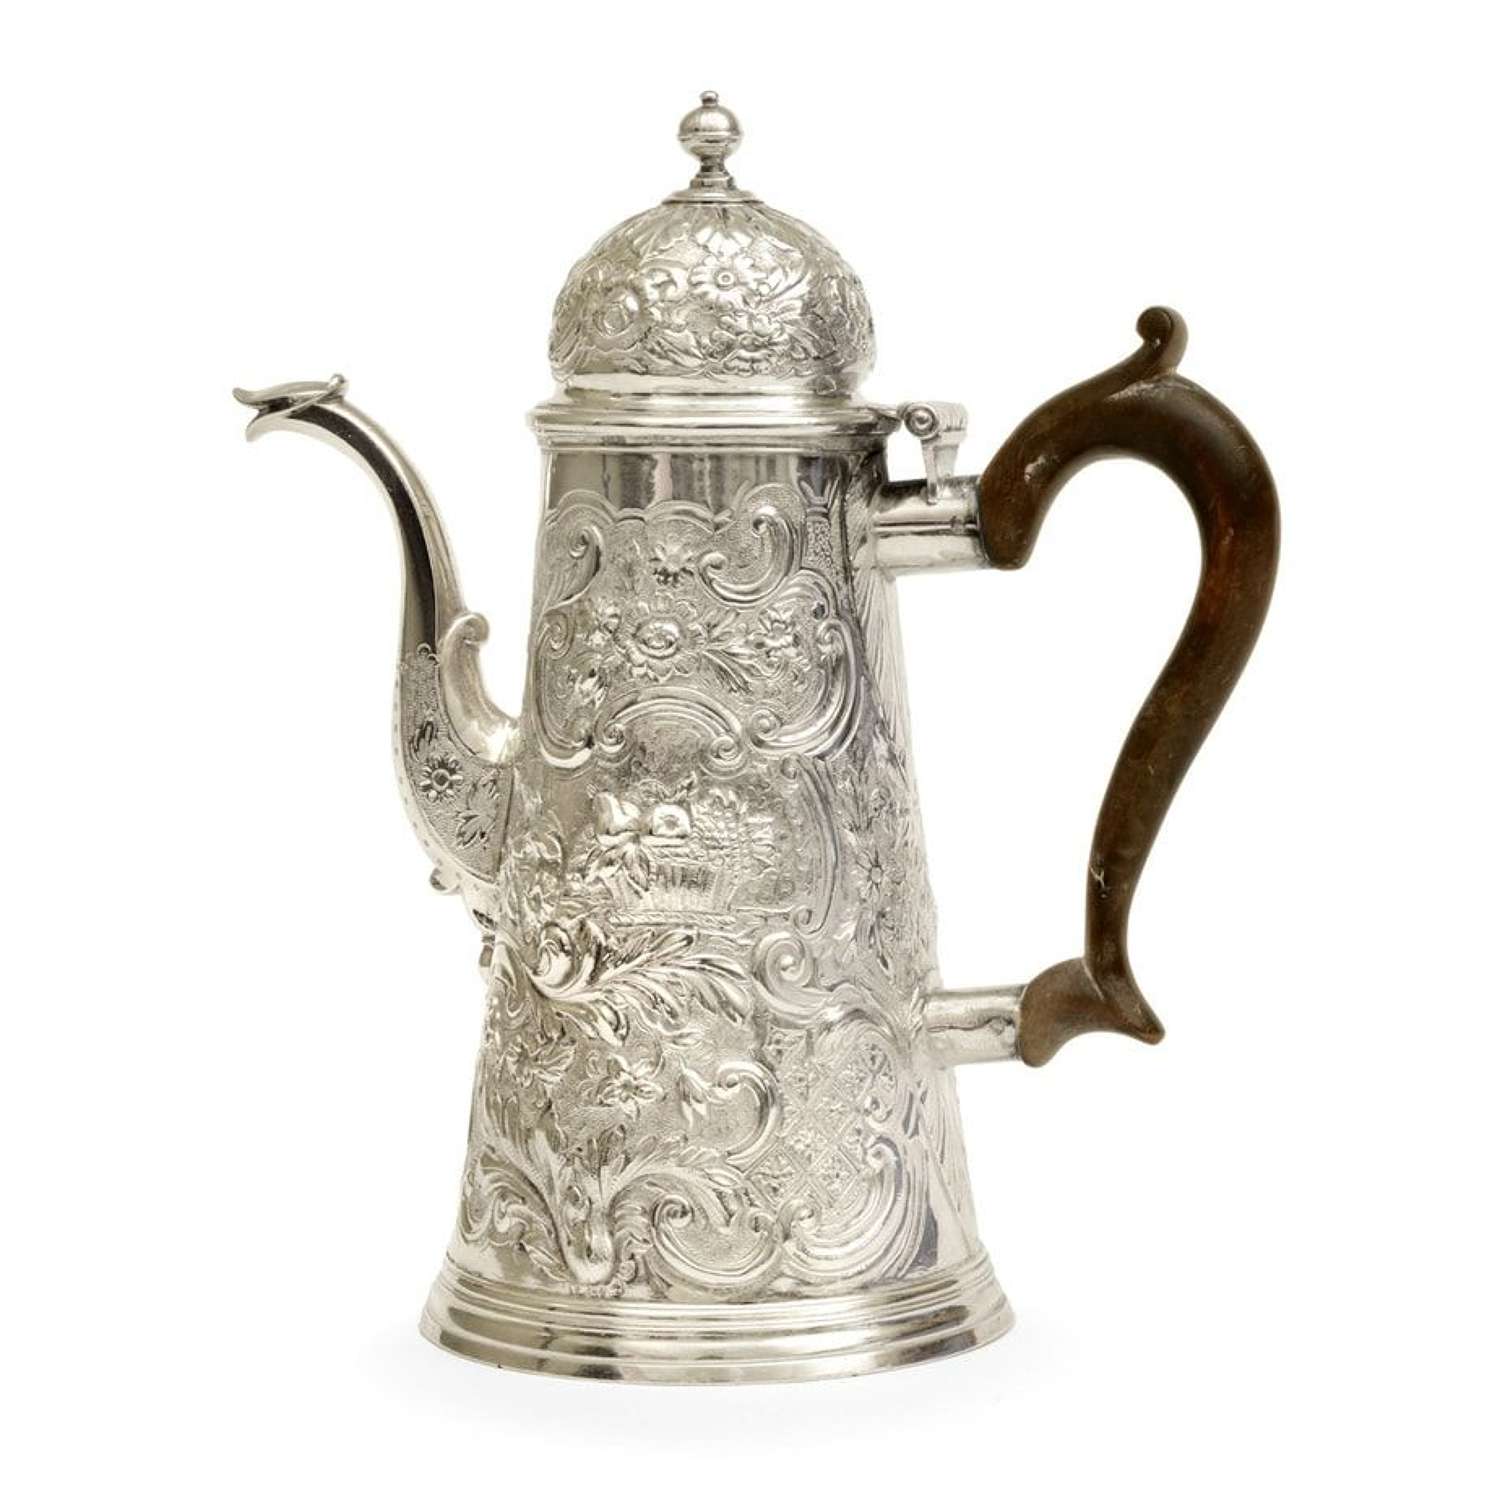 18th Century silver coffee pot